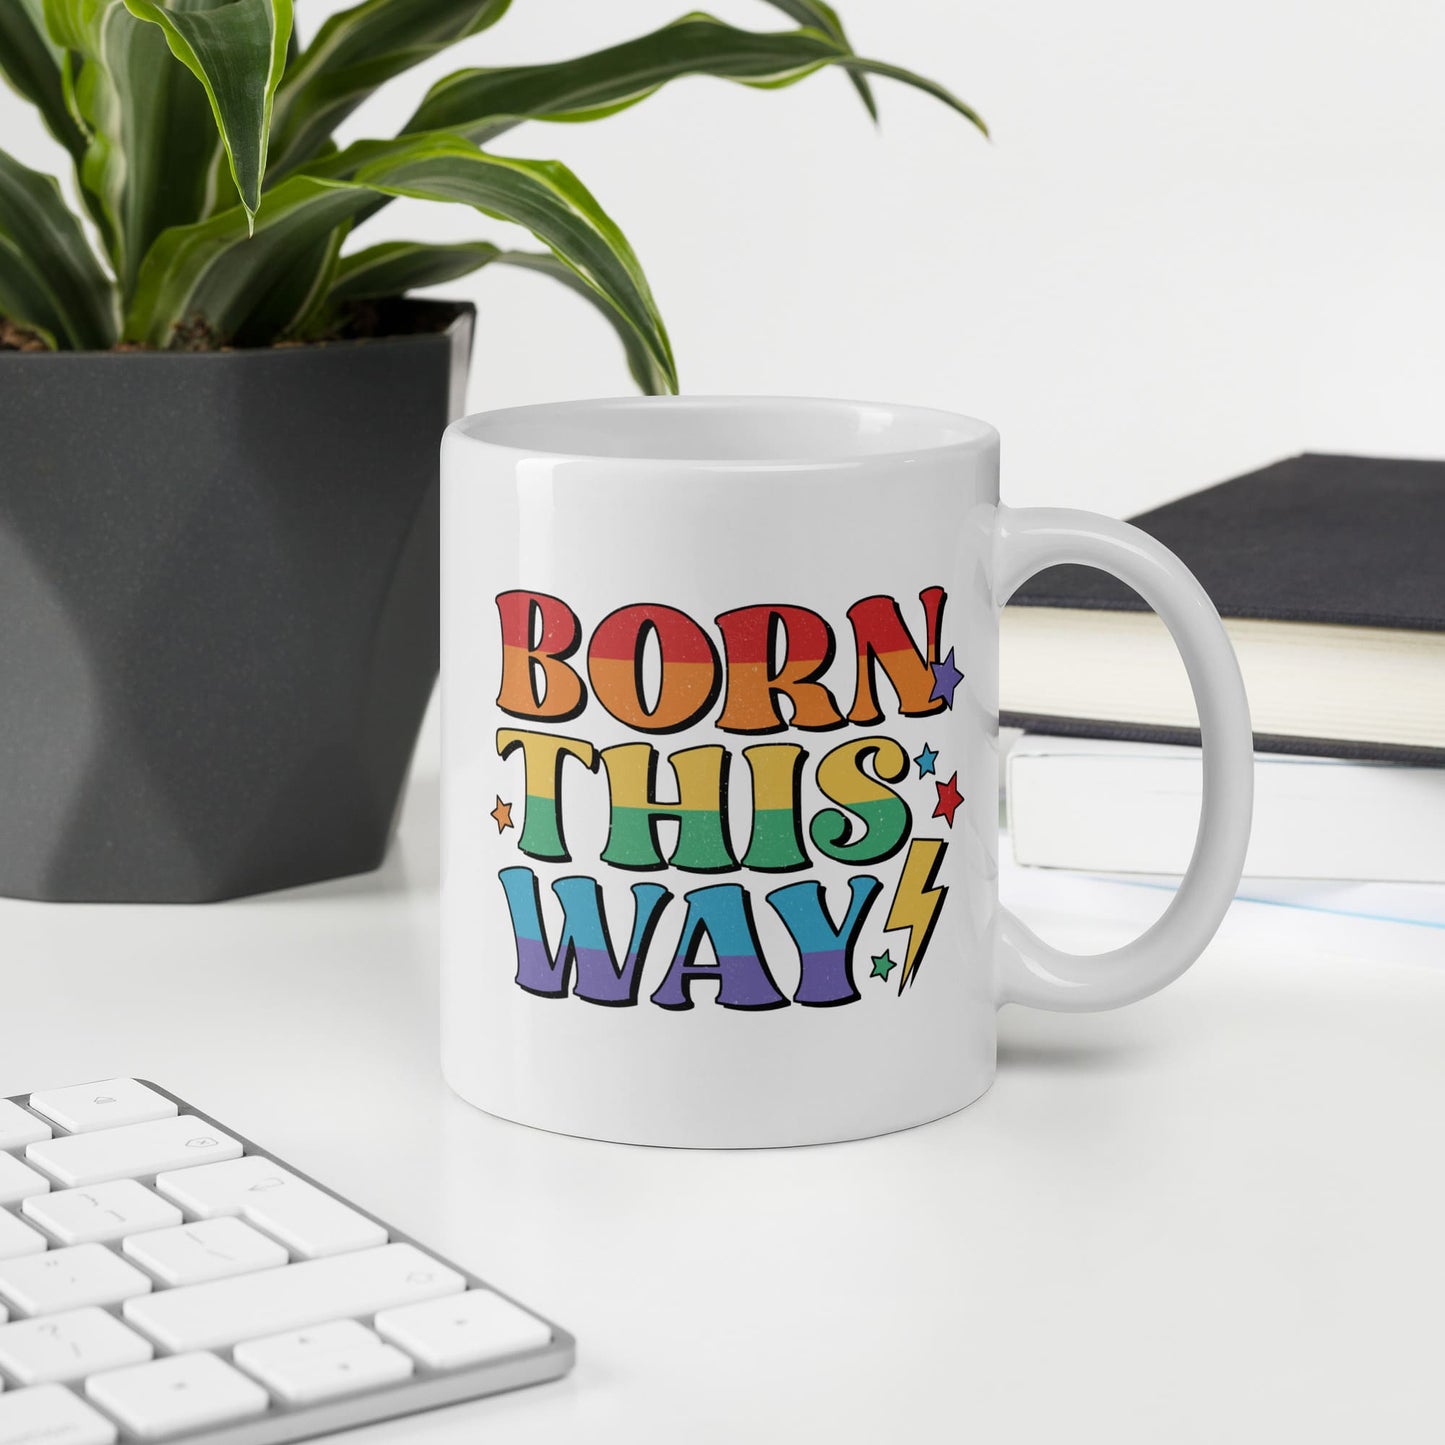 LGBTQ pride mug, born this way coffee or tea cup on desk